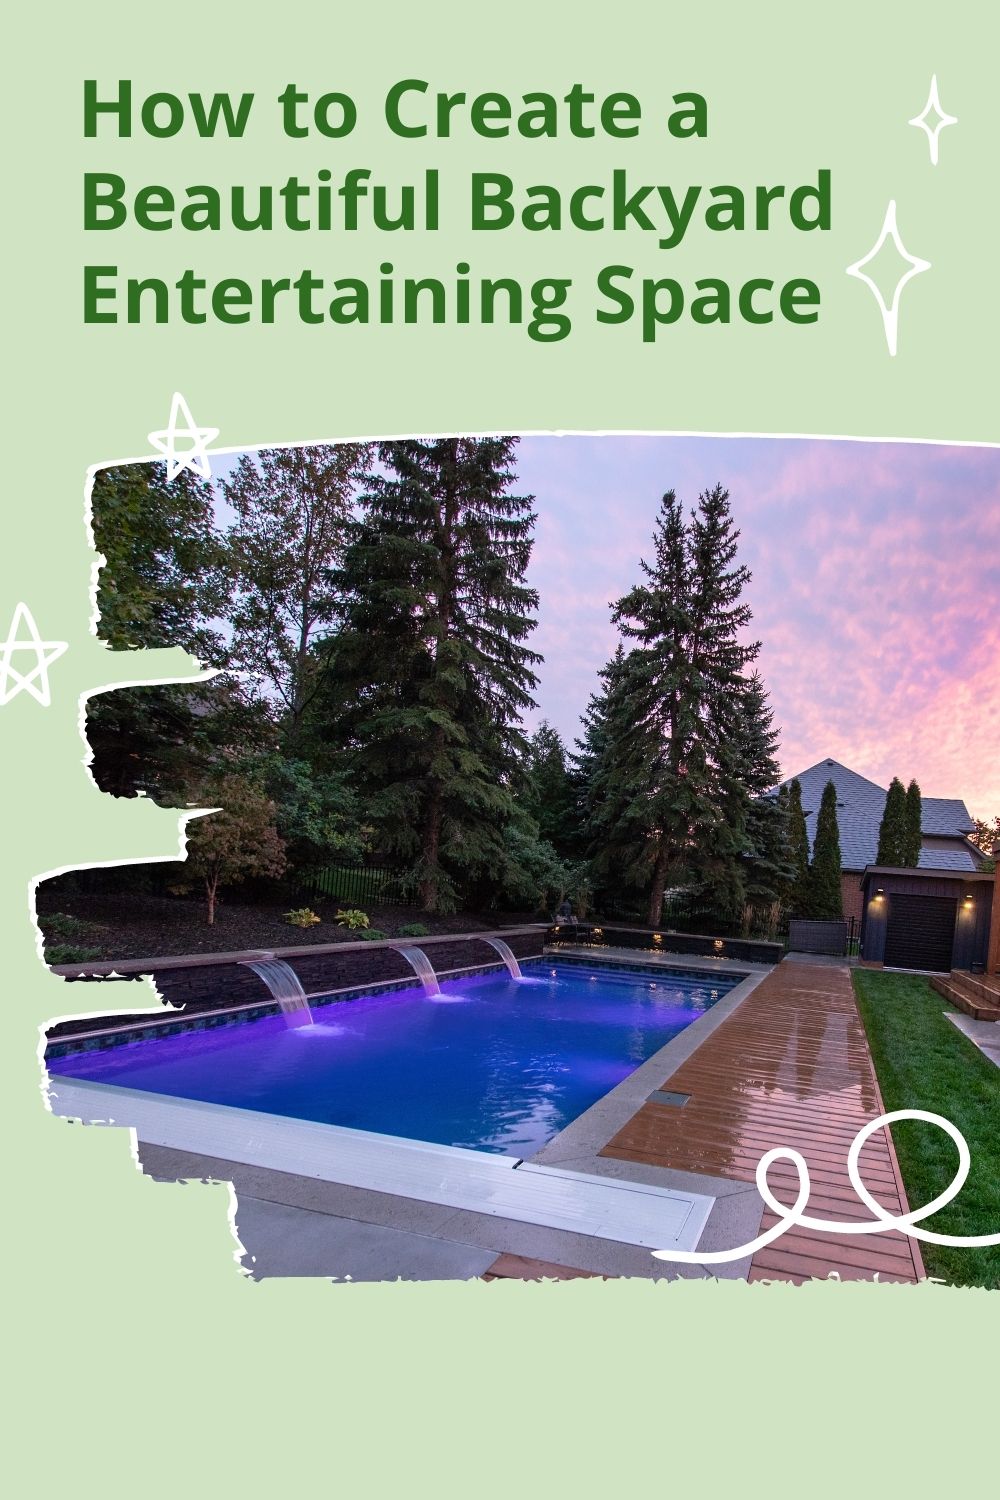 How to Create a Beautiful Backyard Entertaining Space